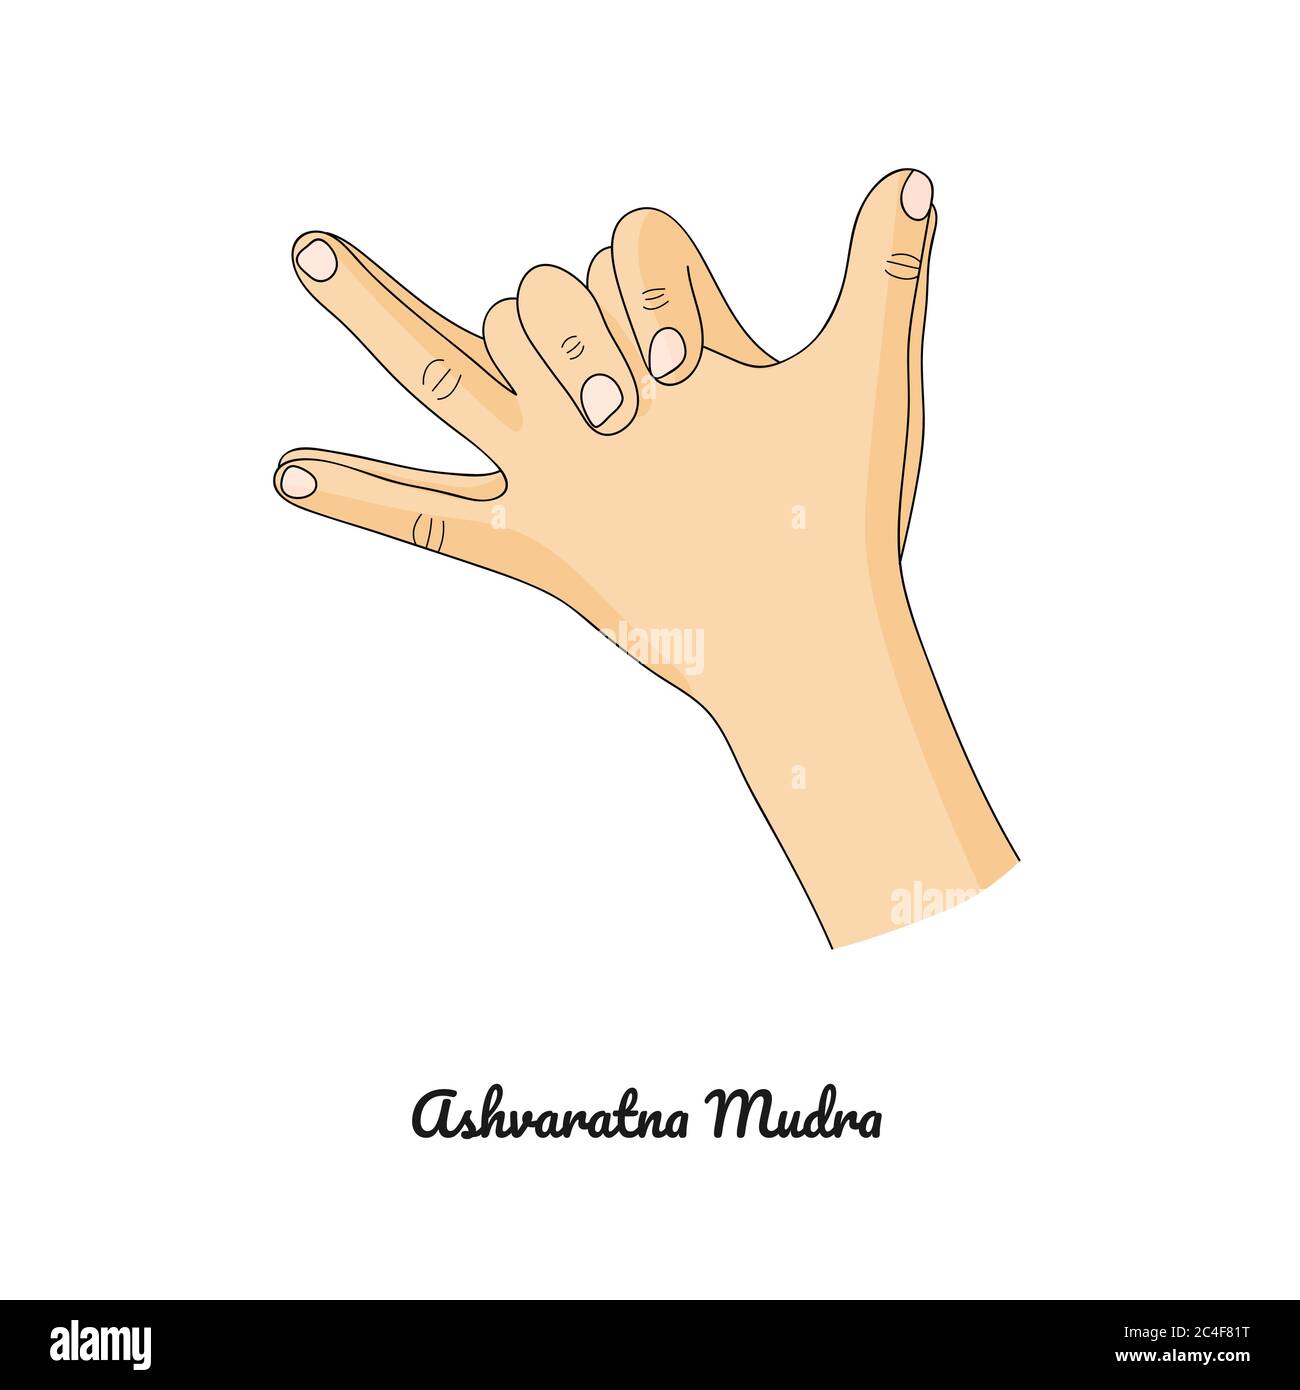 Ashvaratna Mudra / Gesture of Precious Horse. Vettore. Illustrazione Vettoriale